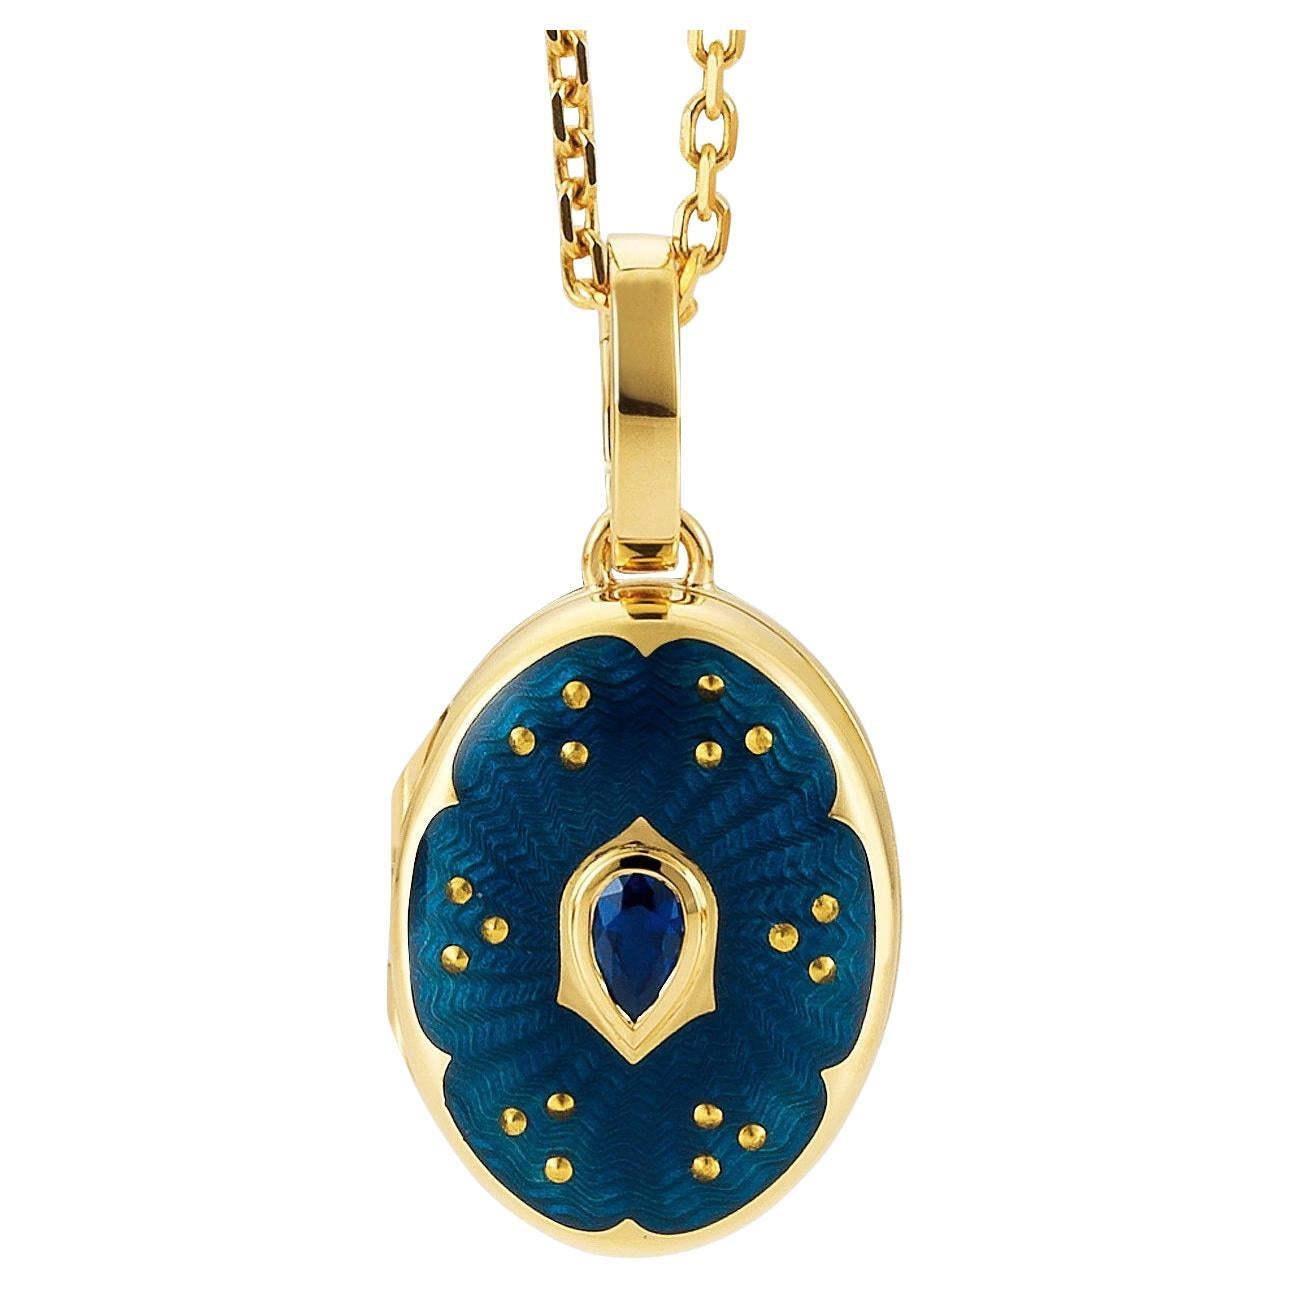  Oval Locket Pendant Necklace - 18k Yellow Gold - Blue Enamel - 1 Sapphire